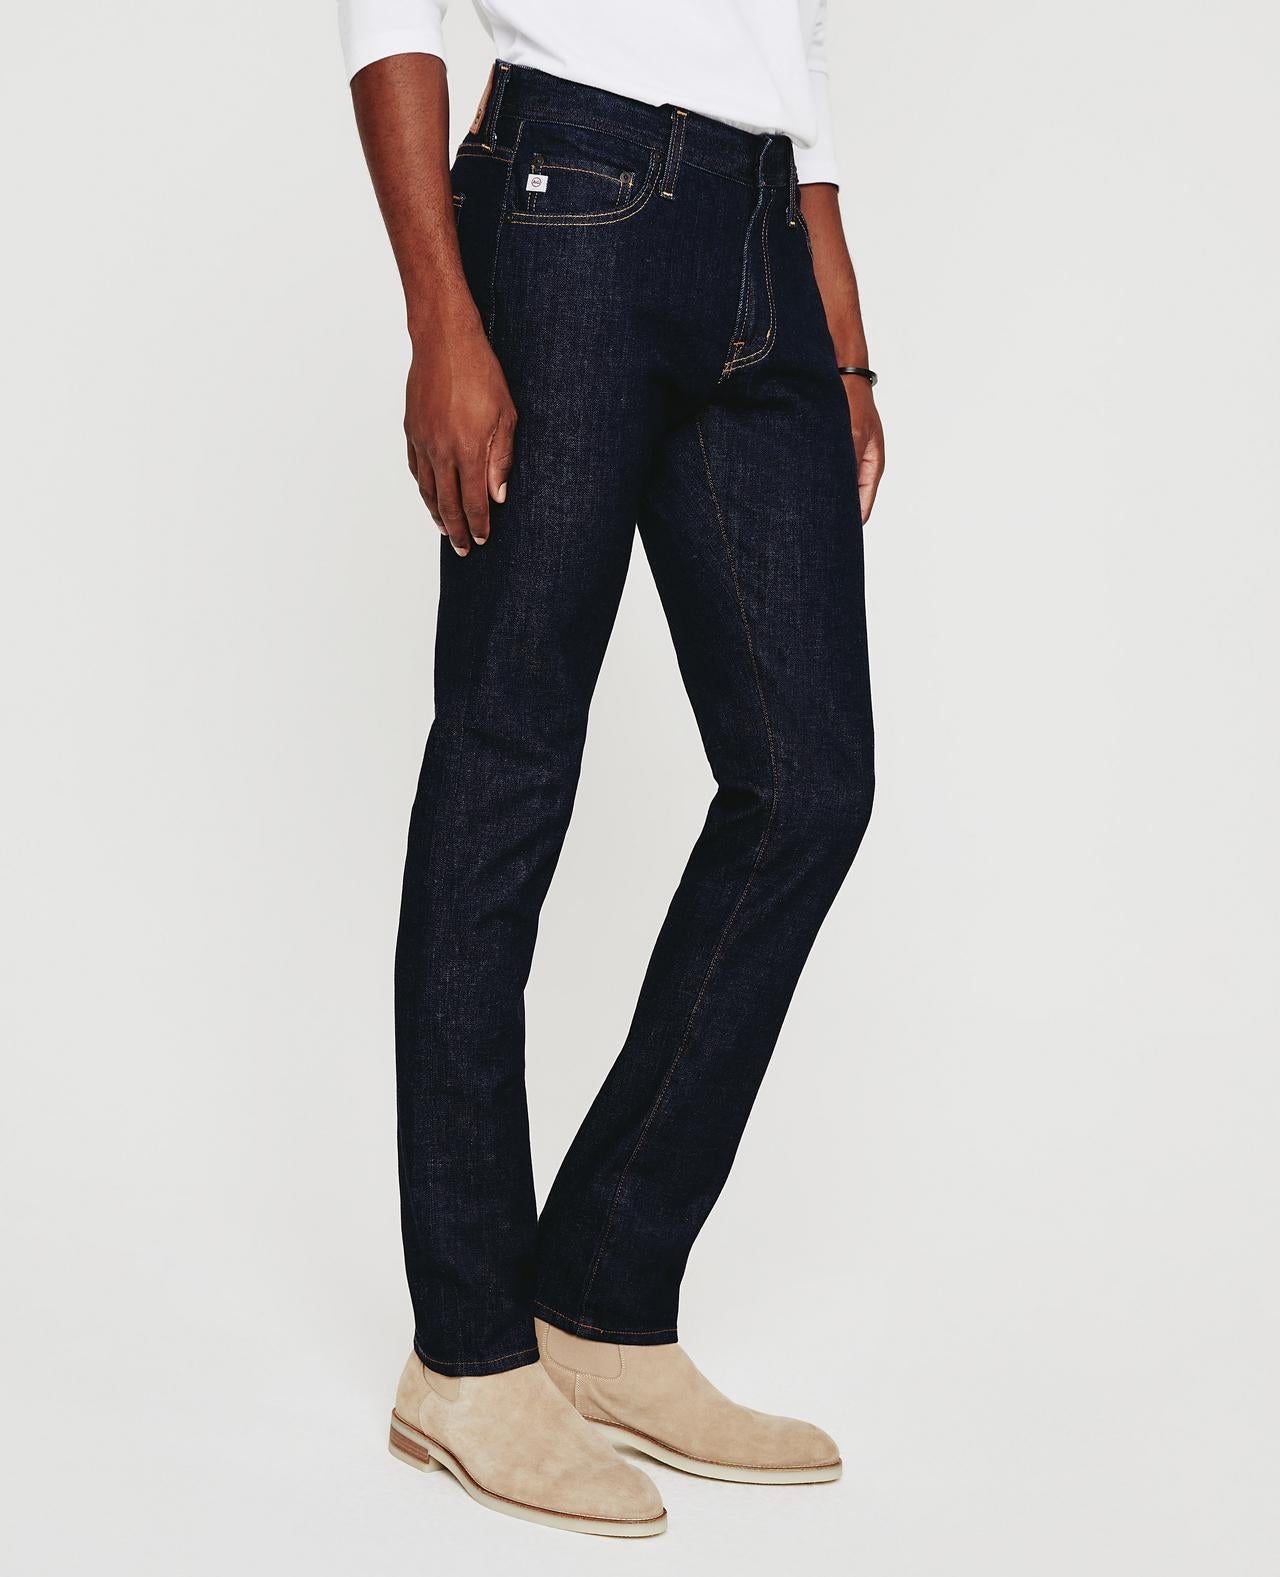 Tellis Modern Slim Jean - AG Jeans - Danali - 1783TSY-CUCL-29